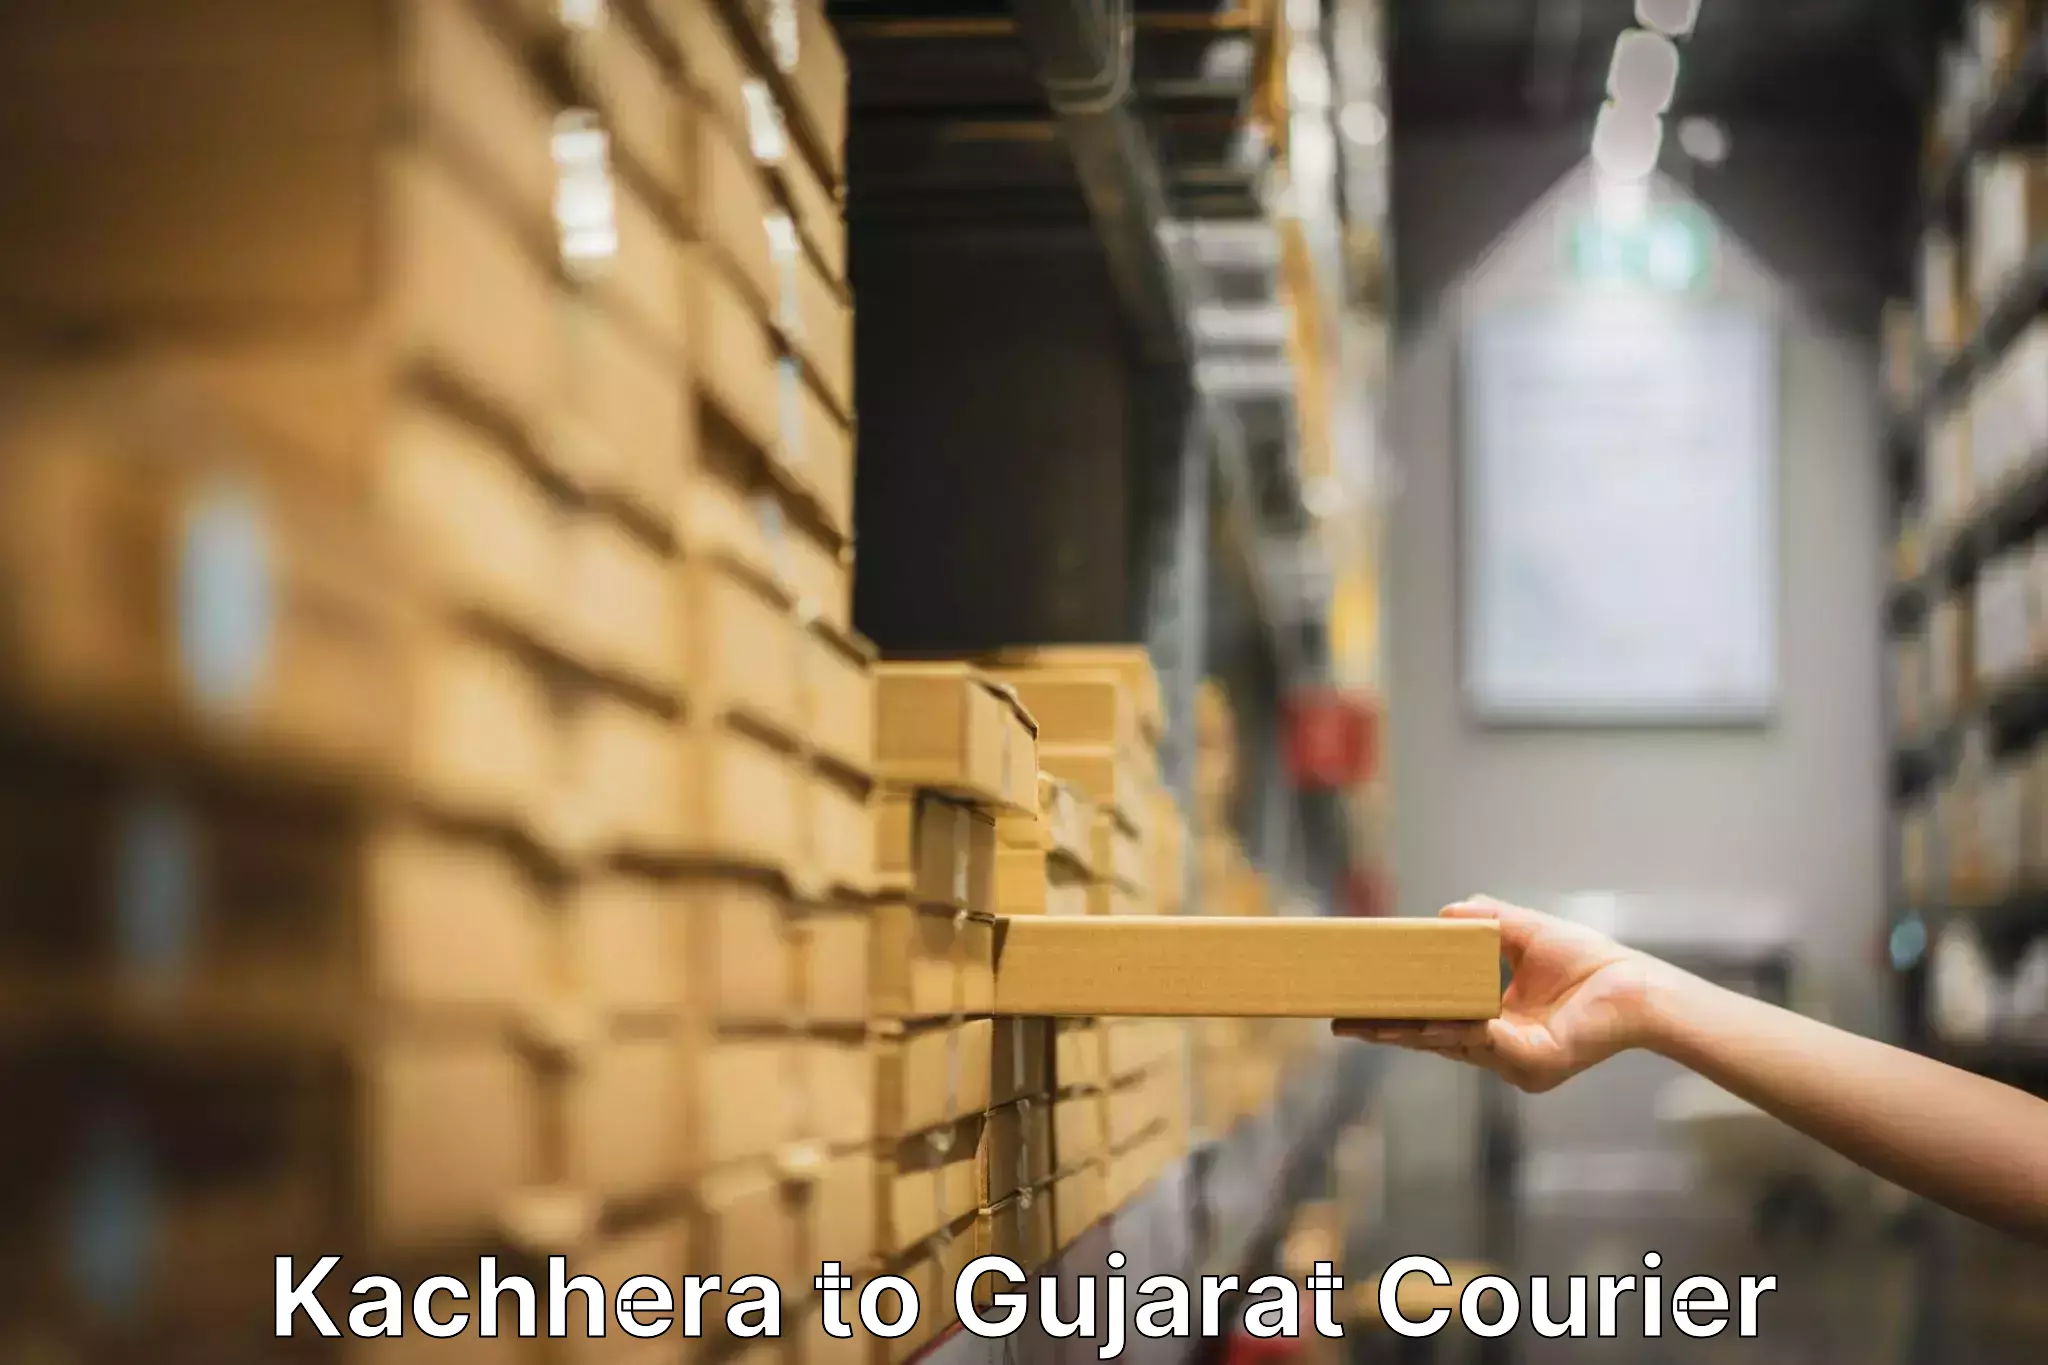 Furniture delivery service Kachhera to Gujarat